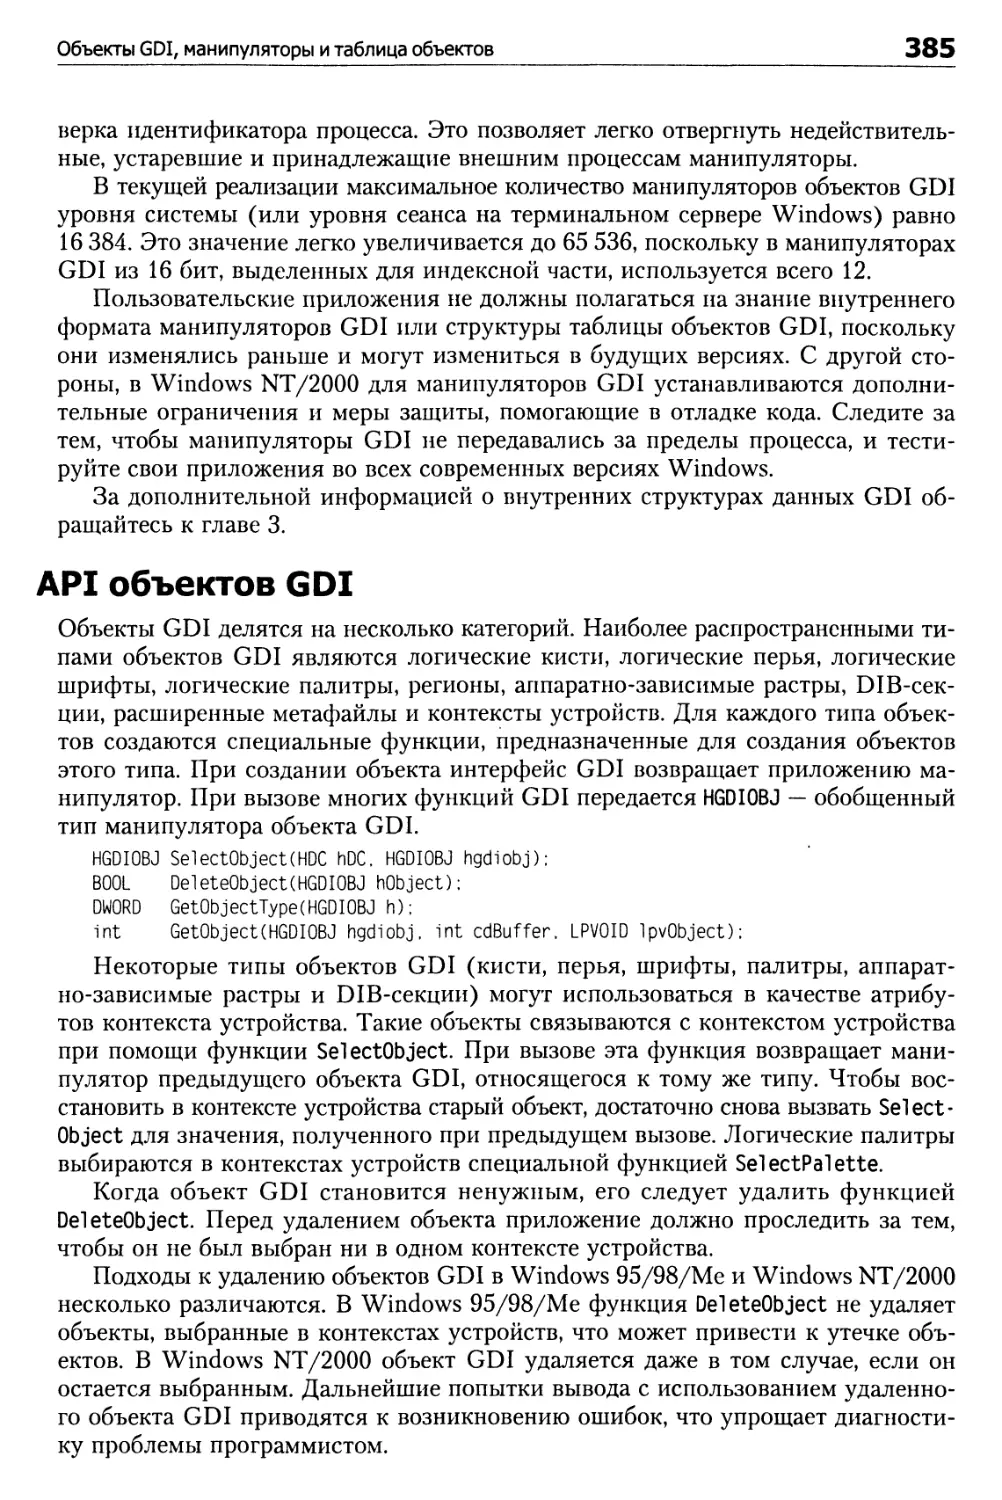 API объектов GDI